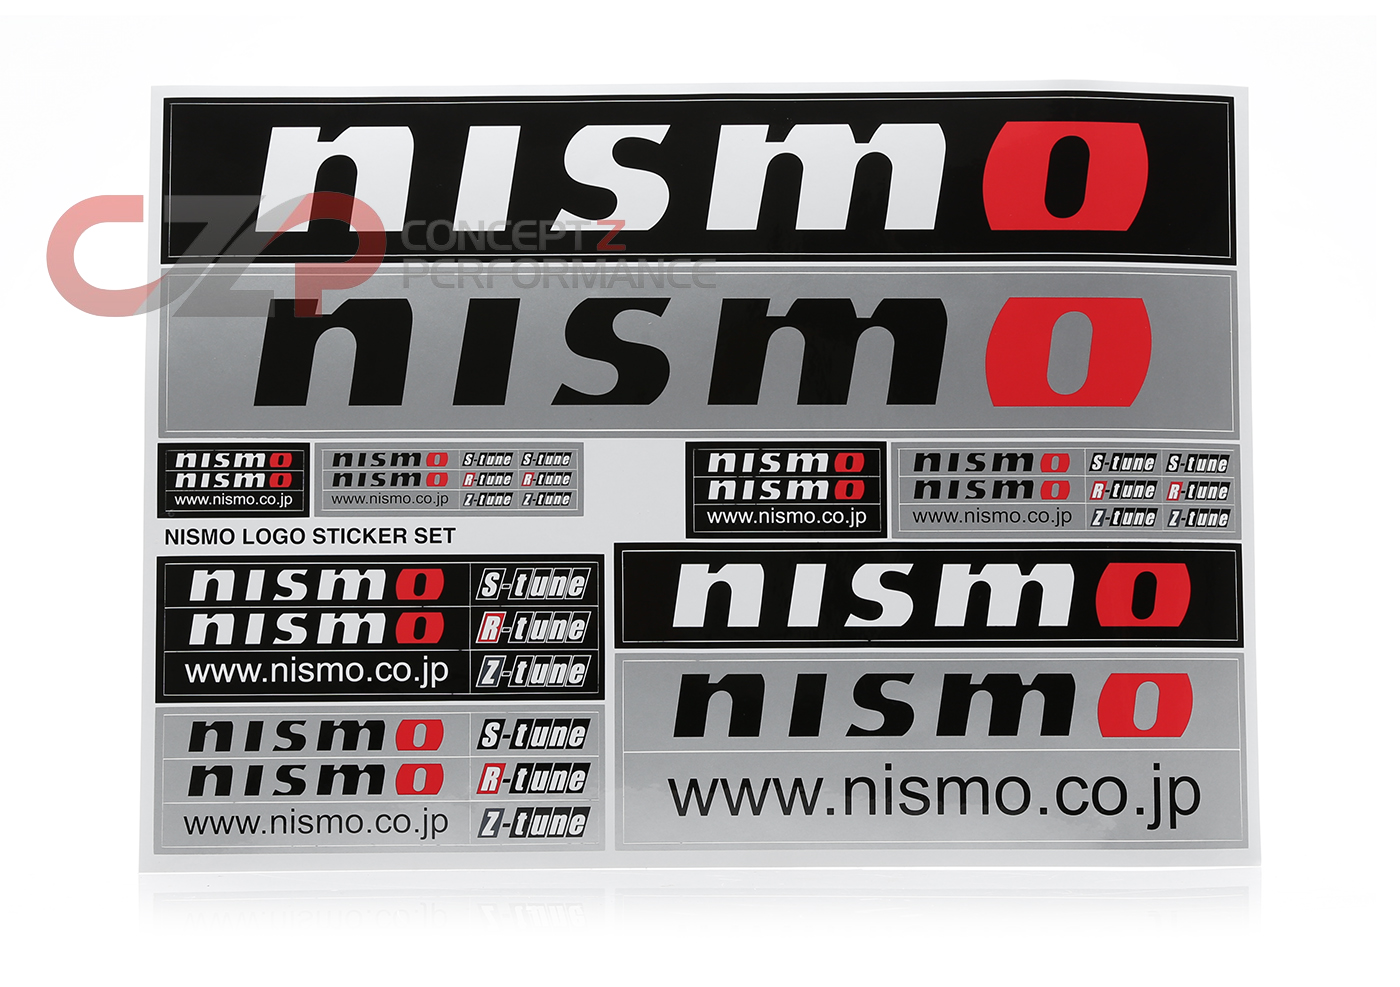 Nismo 99992-RN237 "NISMO" Open O Logo Sticker Decal Set